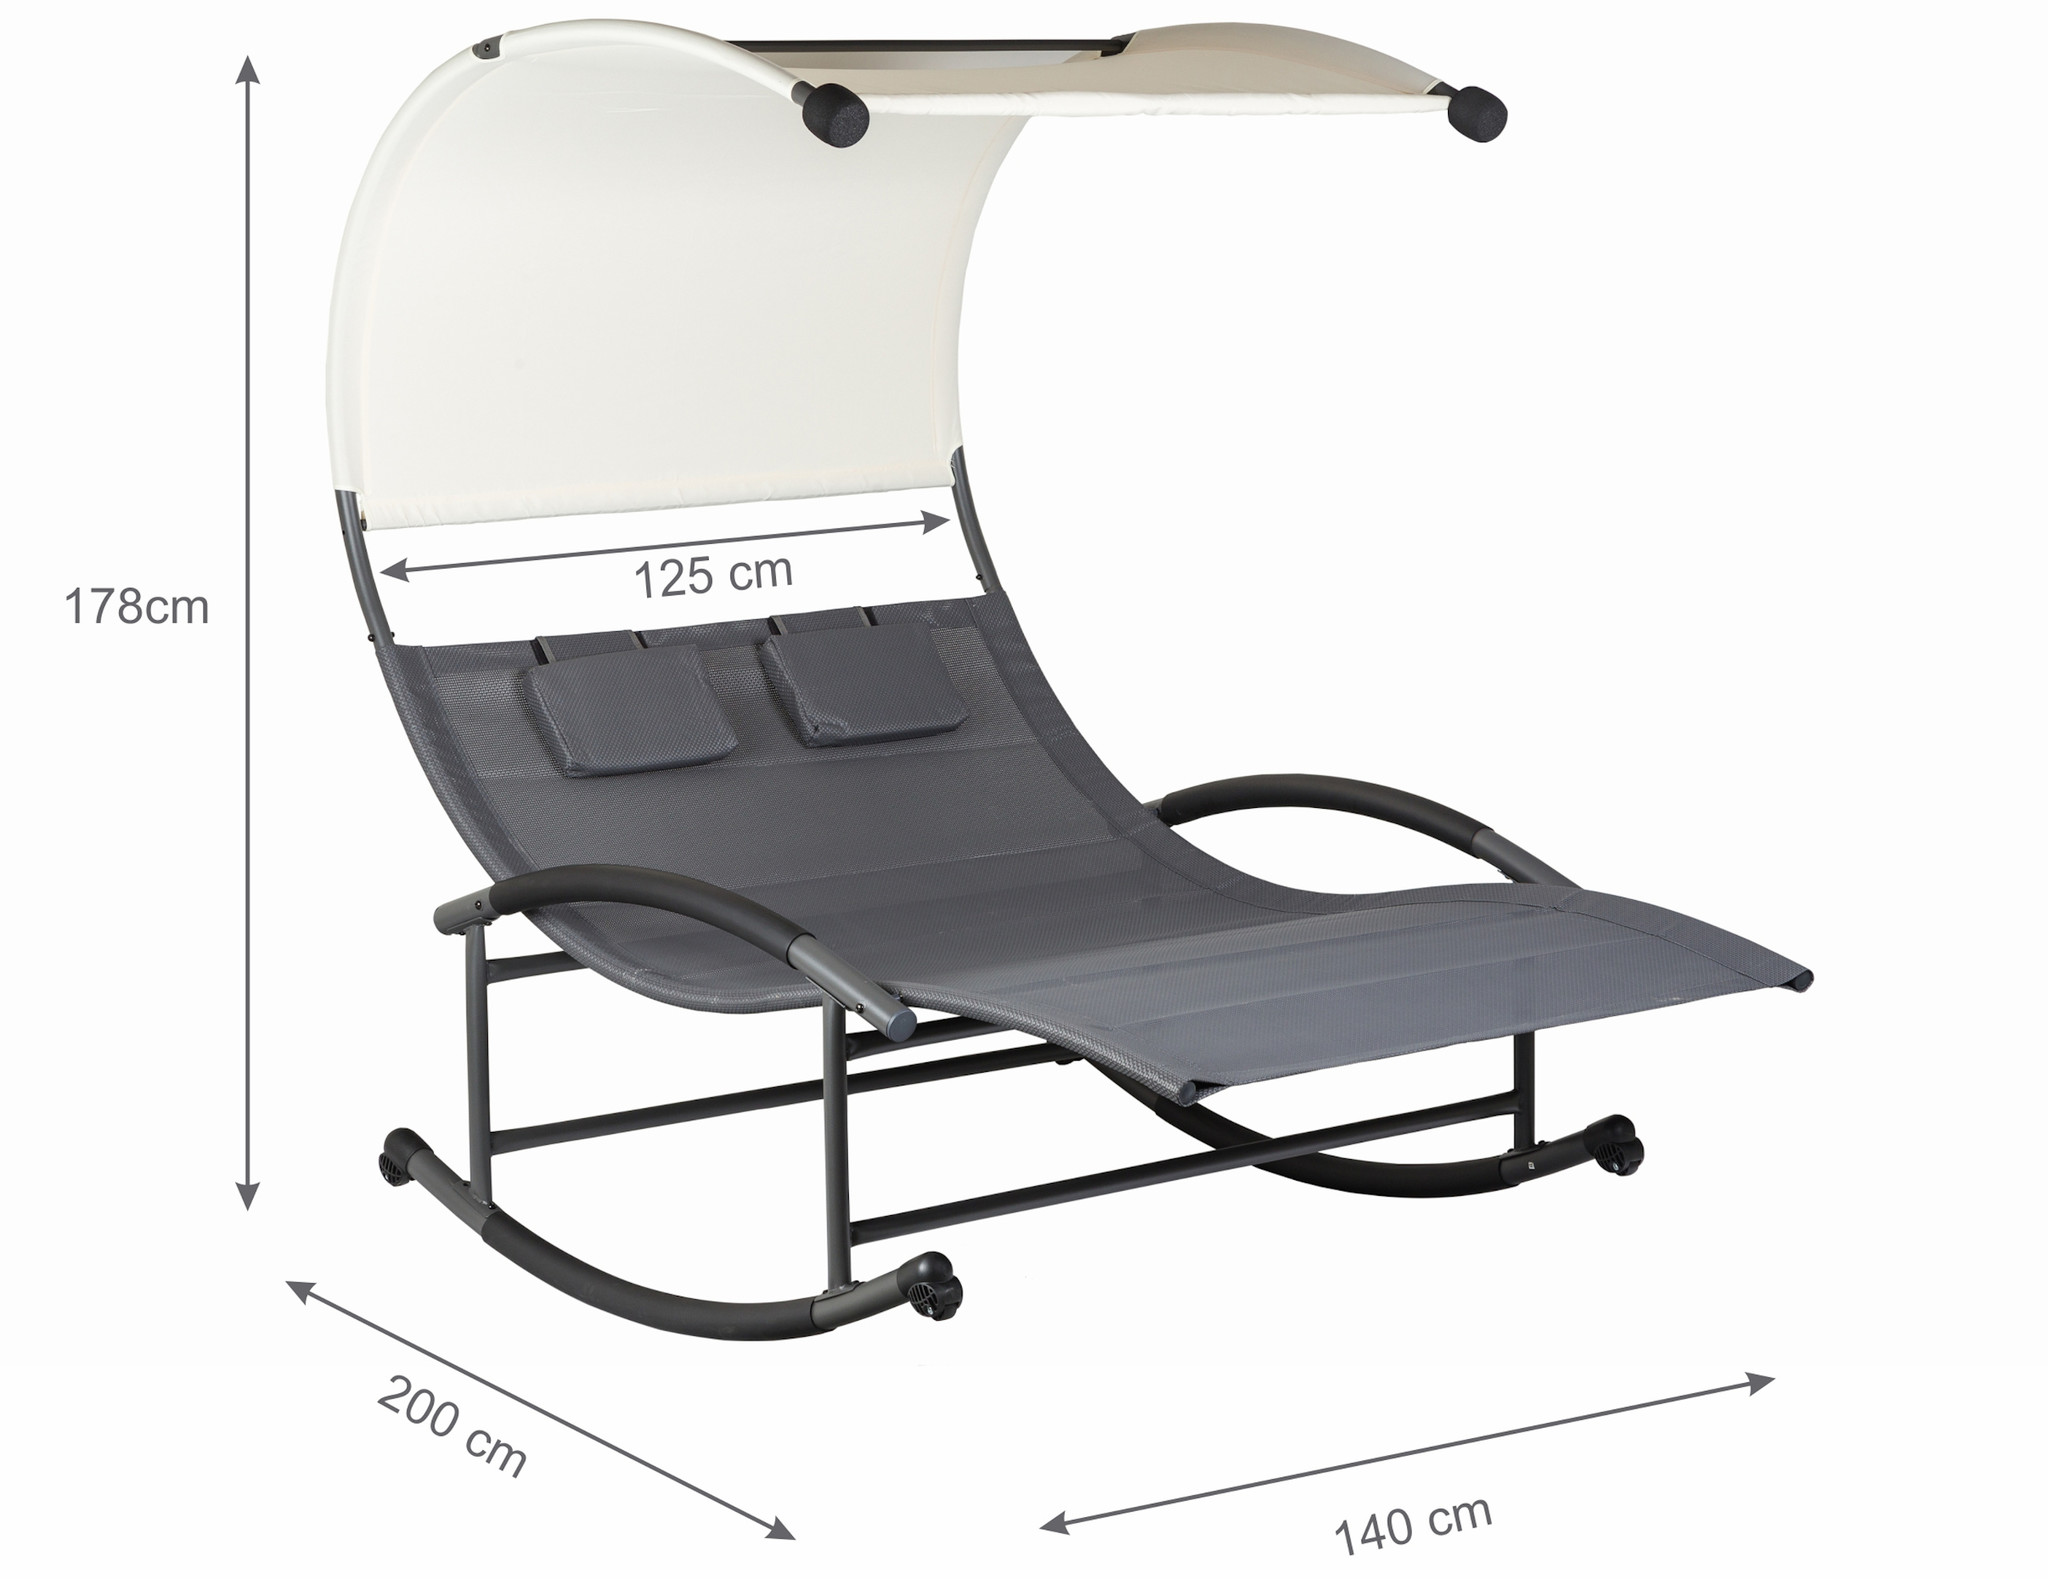 genezen Ideaal Graan Viking Choice Duo Tuinstoel schommelstoel - 140x200x178 cm -Zwart -  VC-Lifestyle